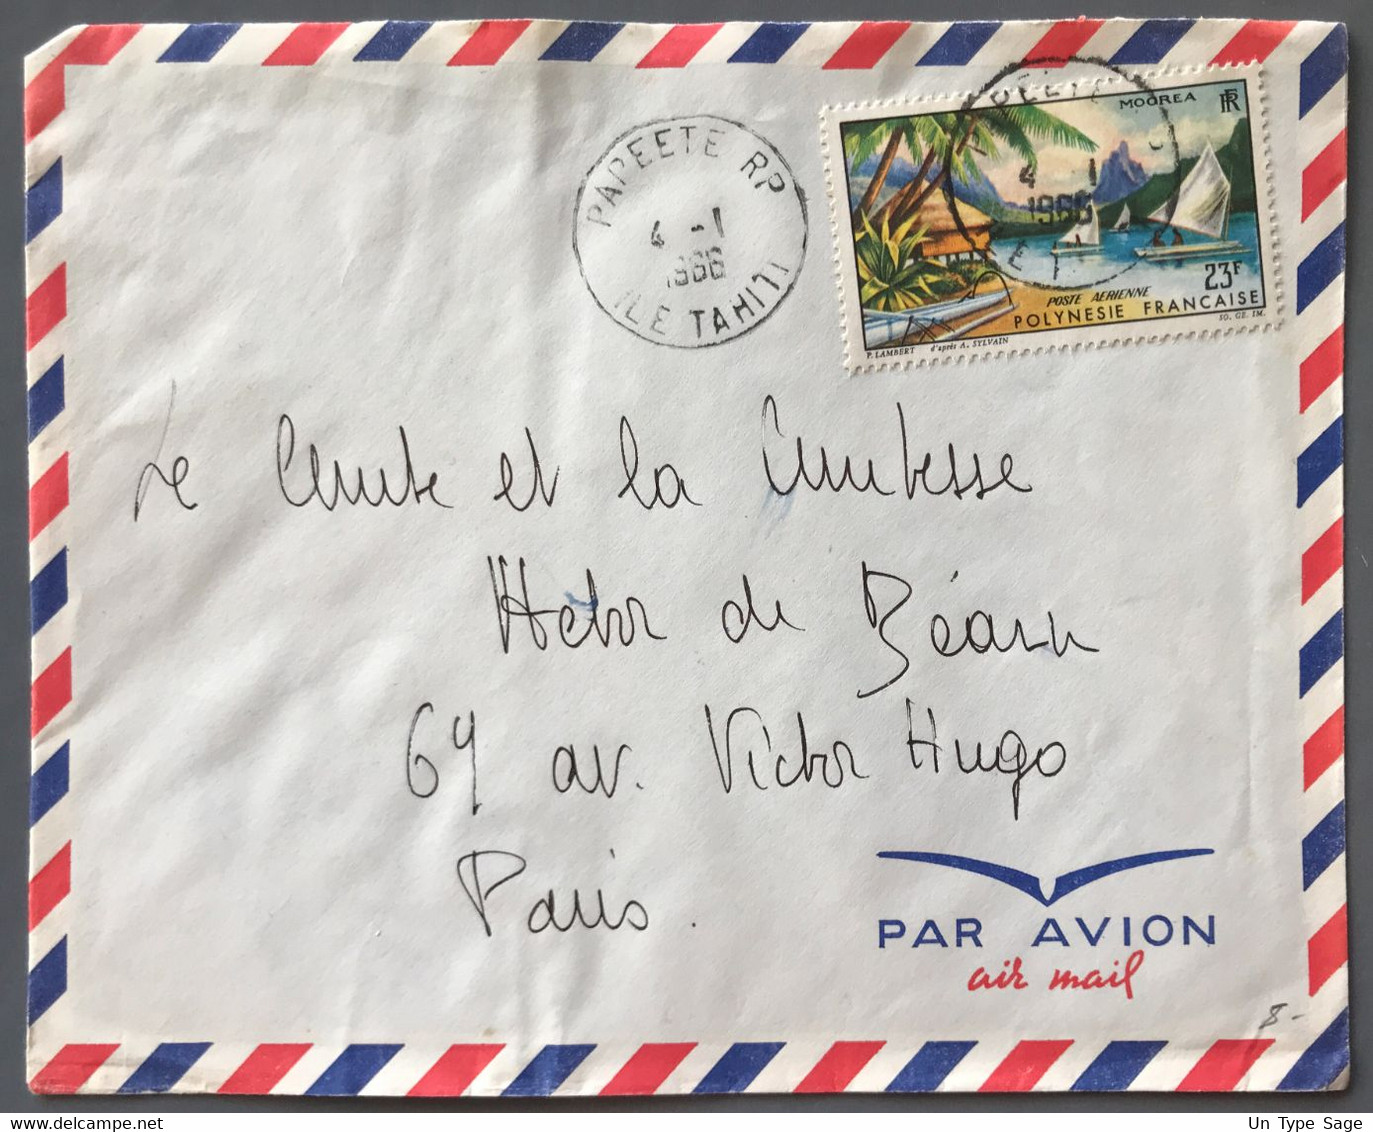 Polynésie Française PA N°9 Sur Enveloppe TAD Papeete R.P. Tahiti 4.1.1966 - (B2126) - Lettres & Documents